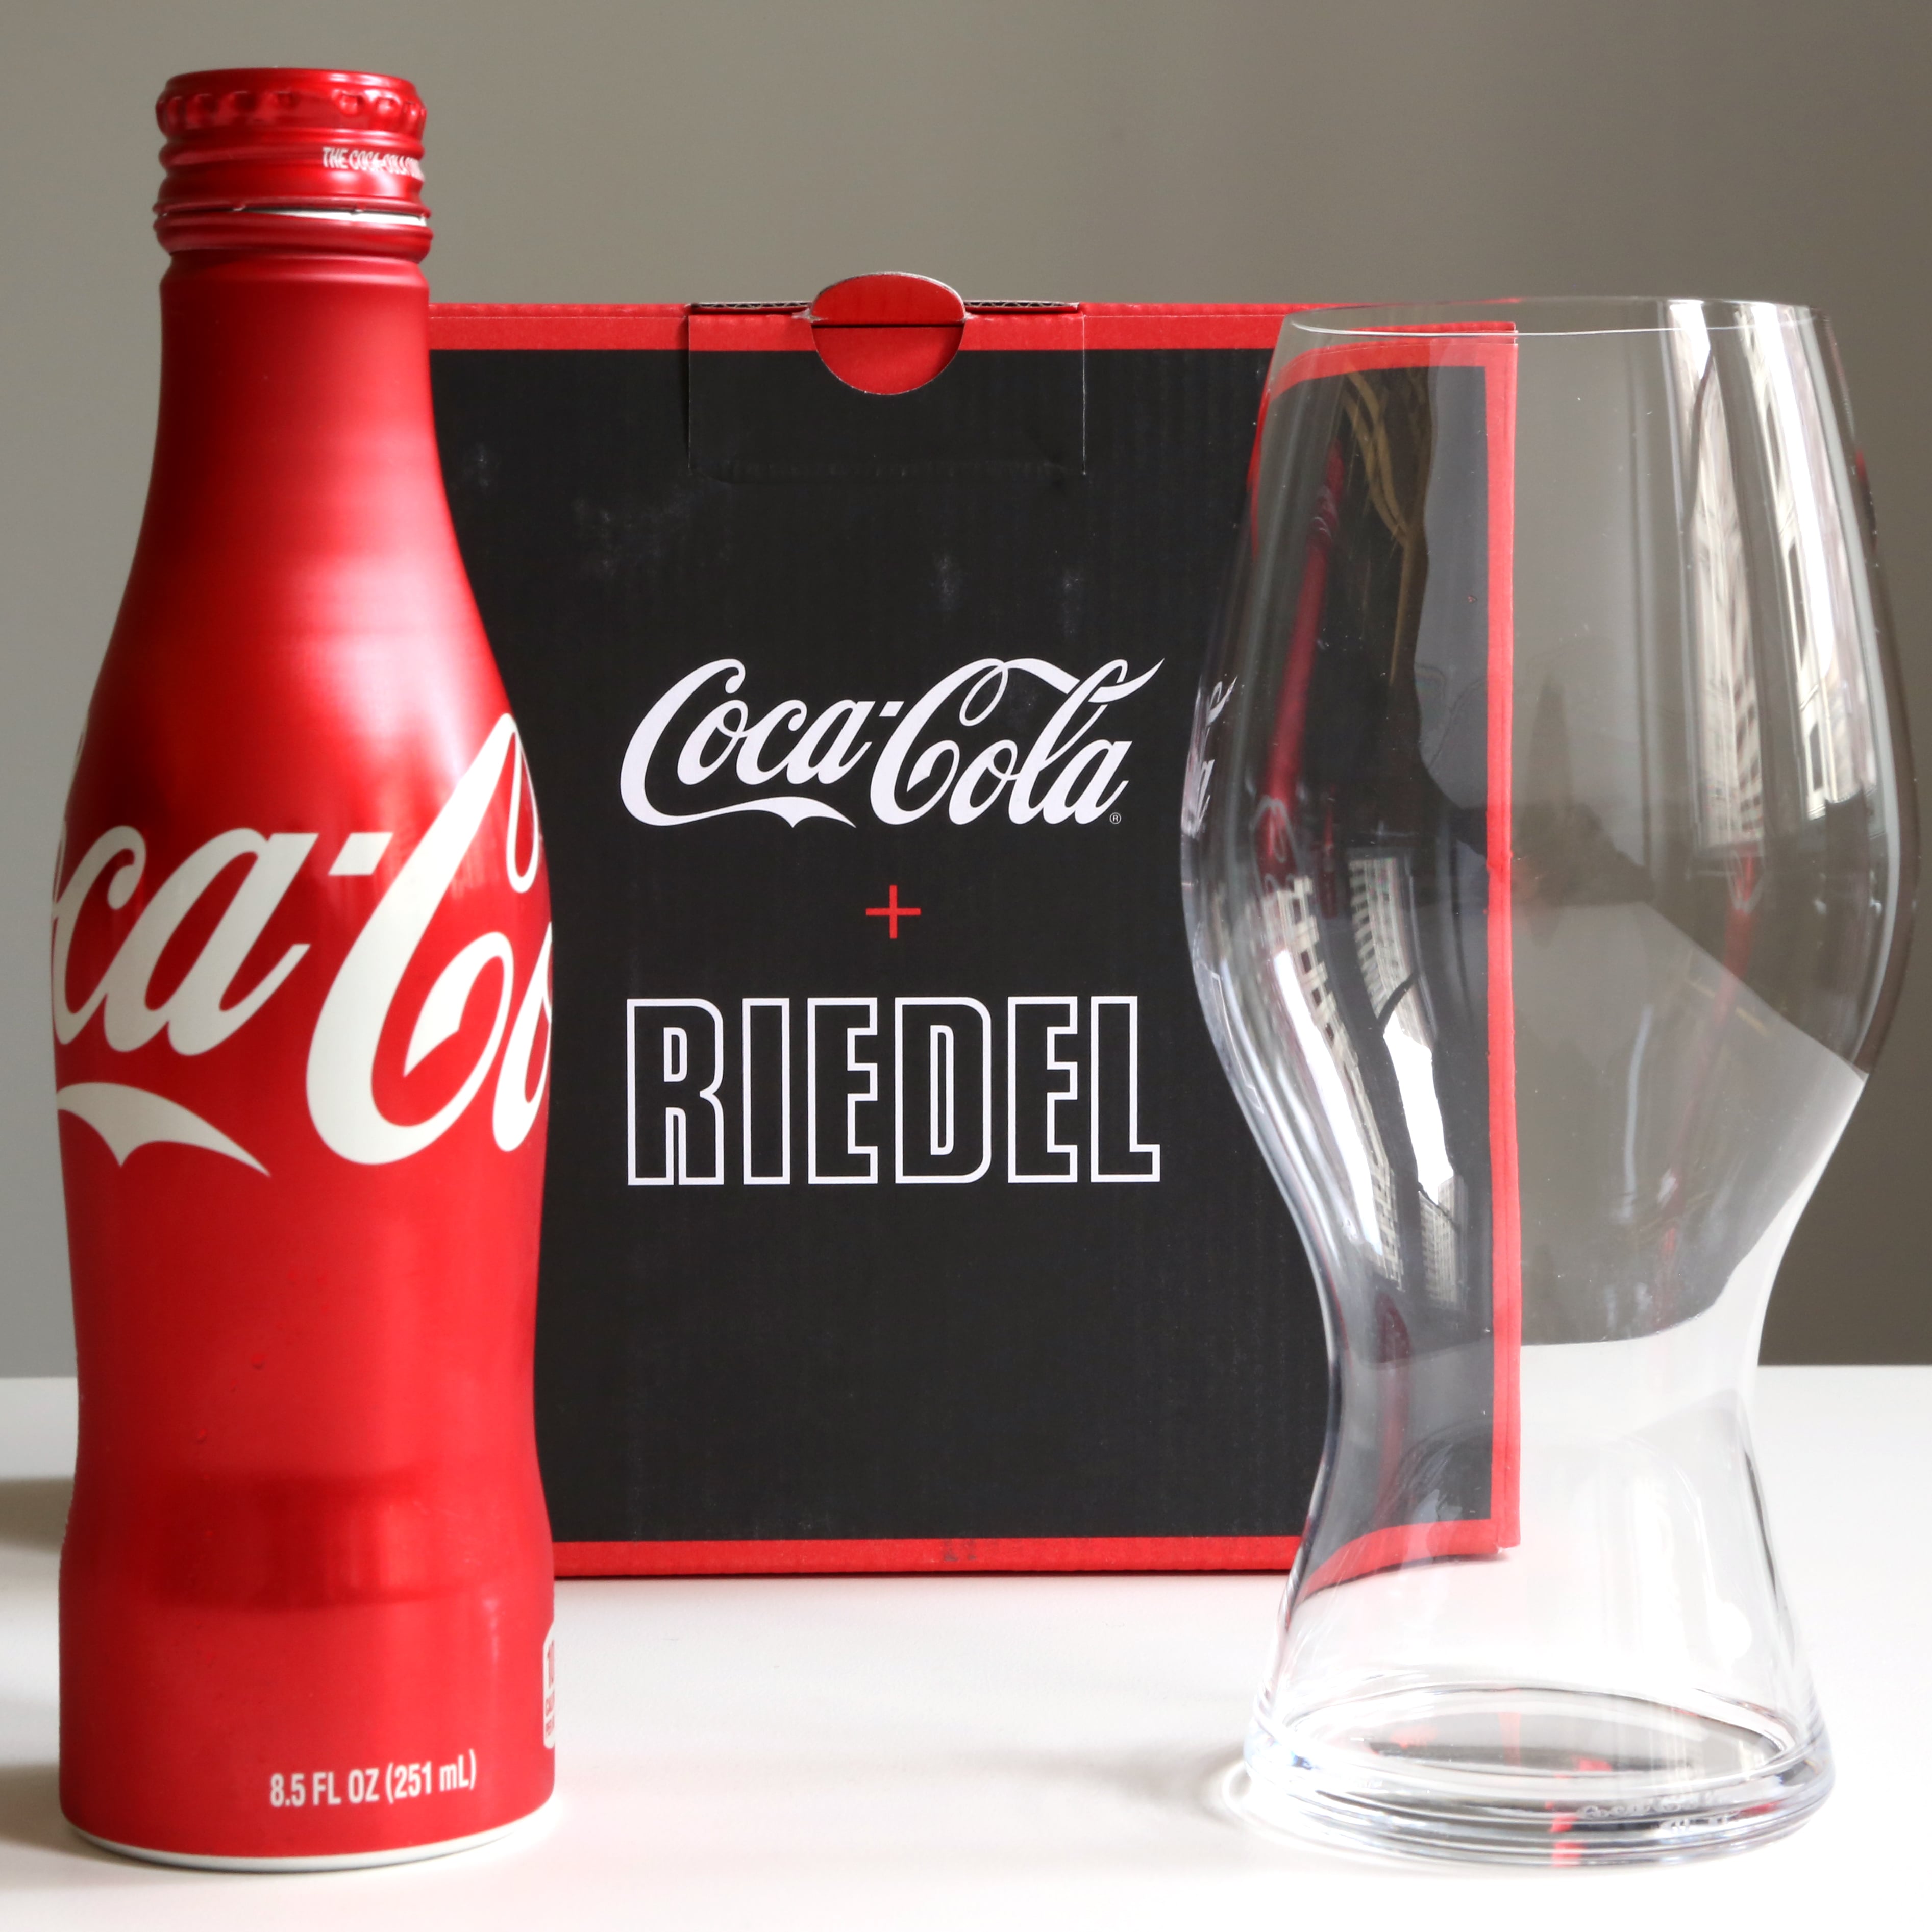 Reidel's Special $30 Coke Glass Makes It Taste Better, Apparently